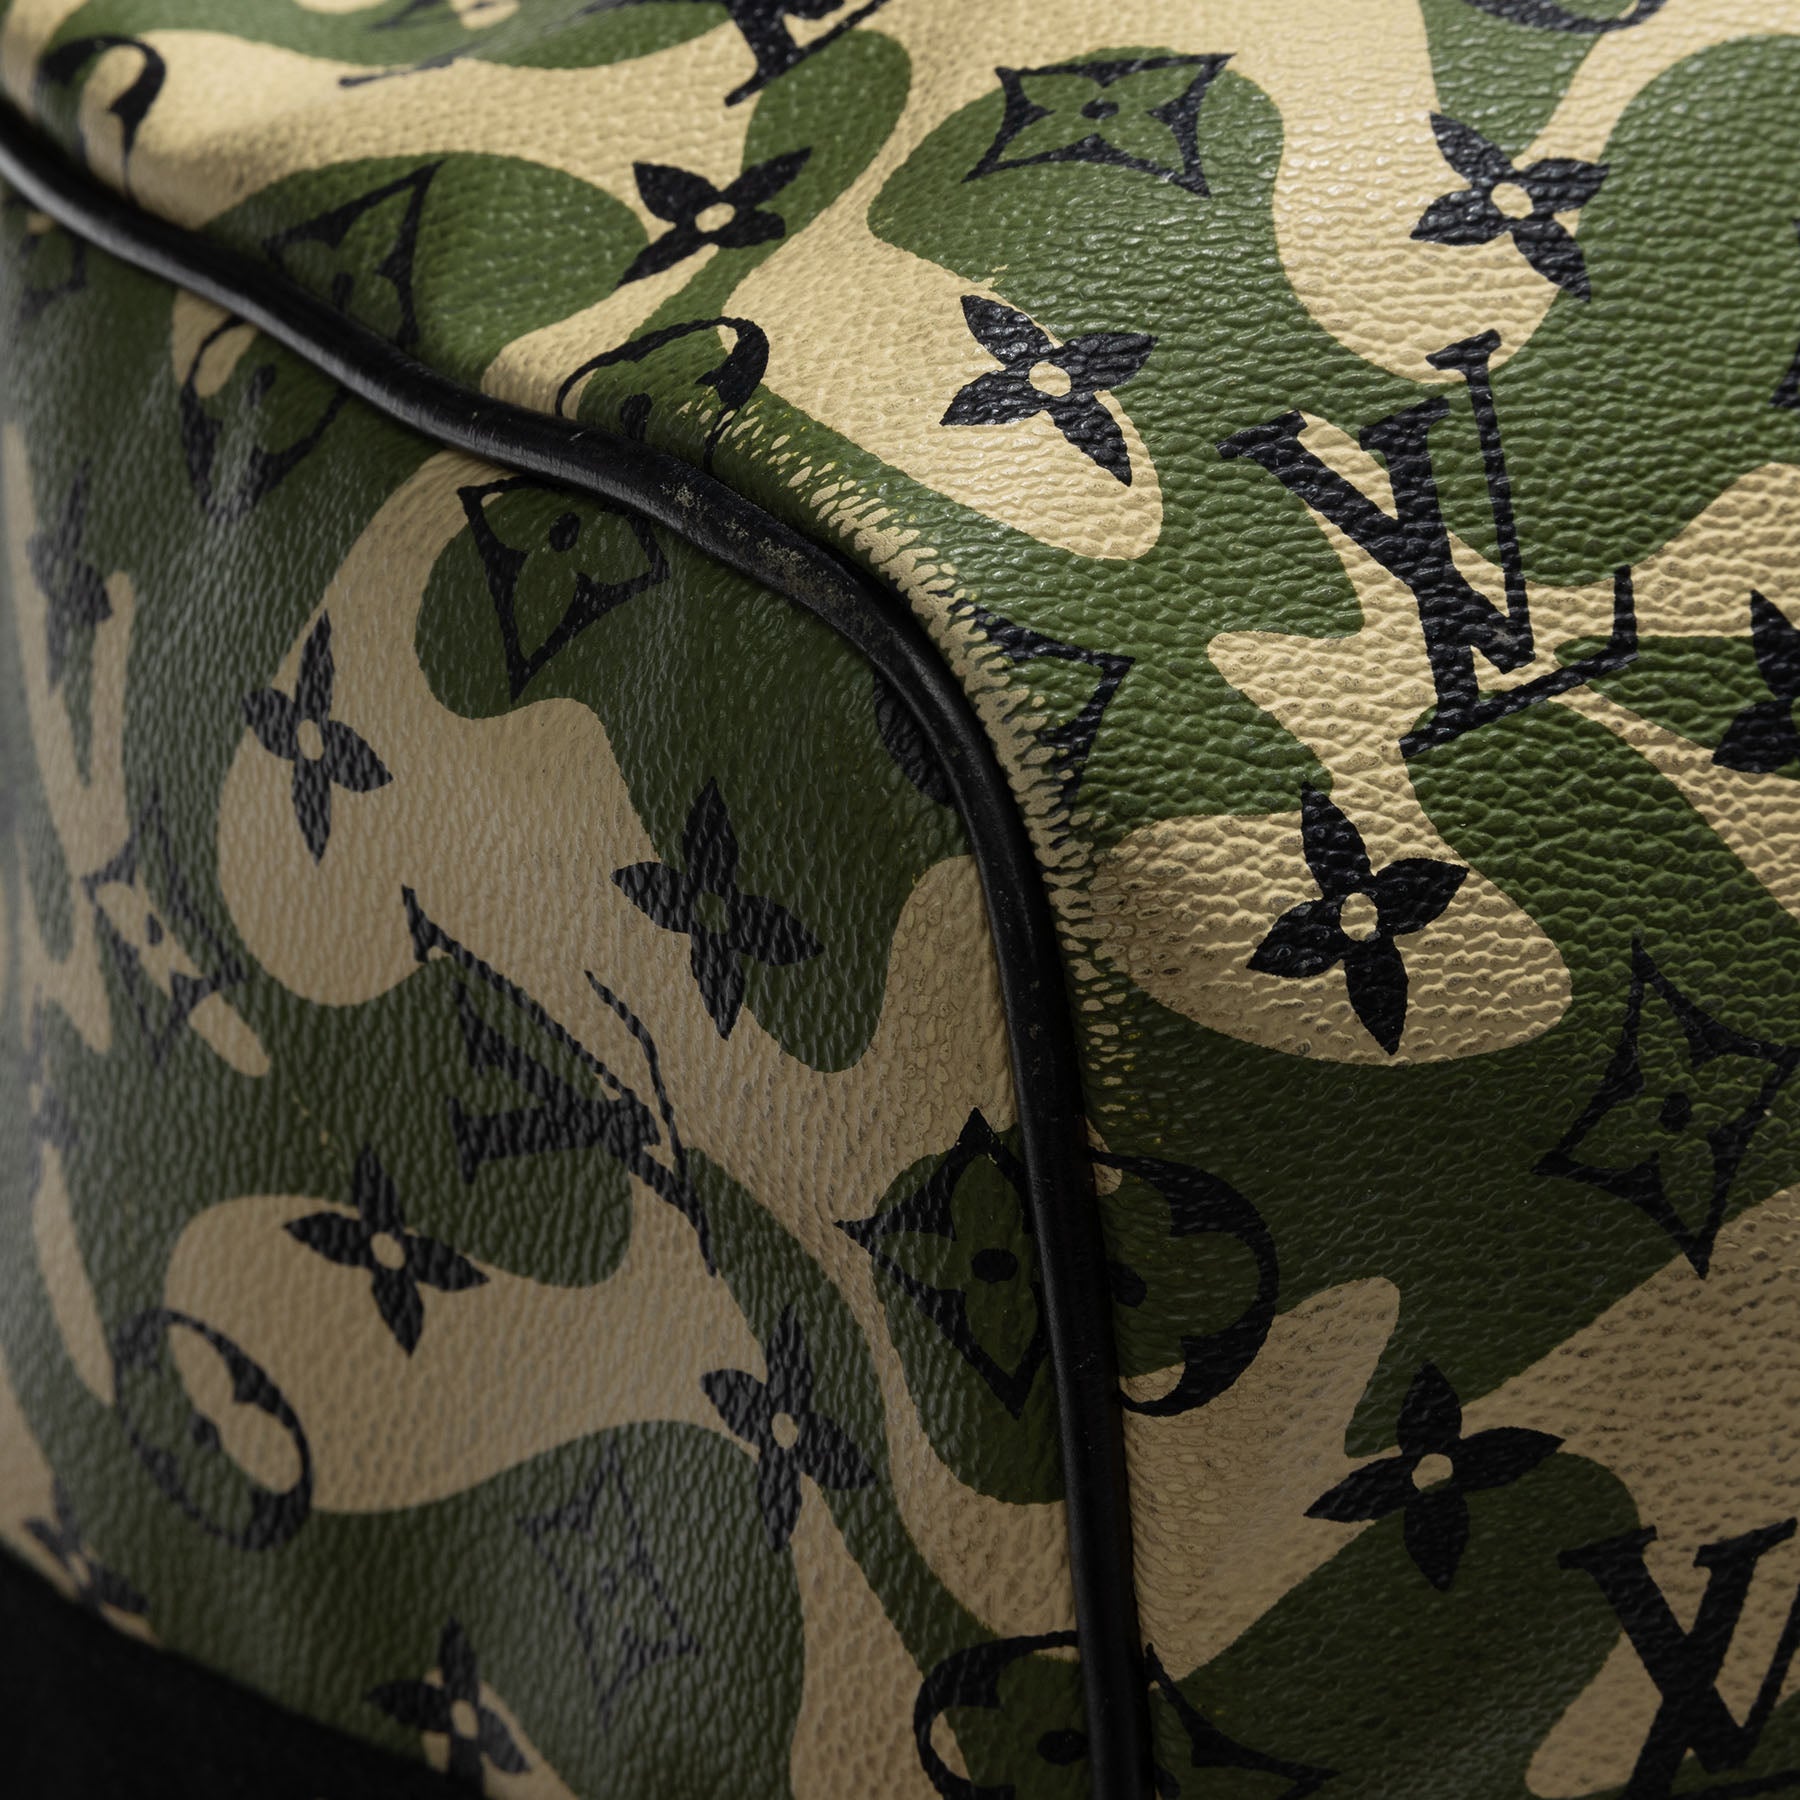 LOUIS VUITTON Monogram Camouflage Keepall 55 Travel Duffle Bag